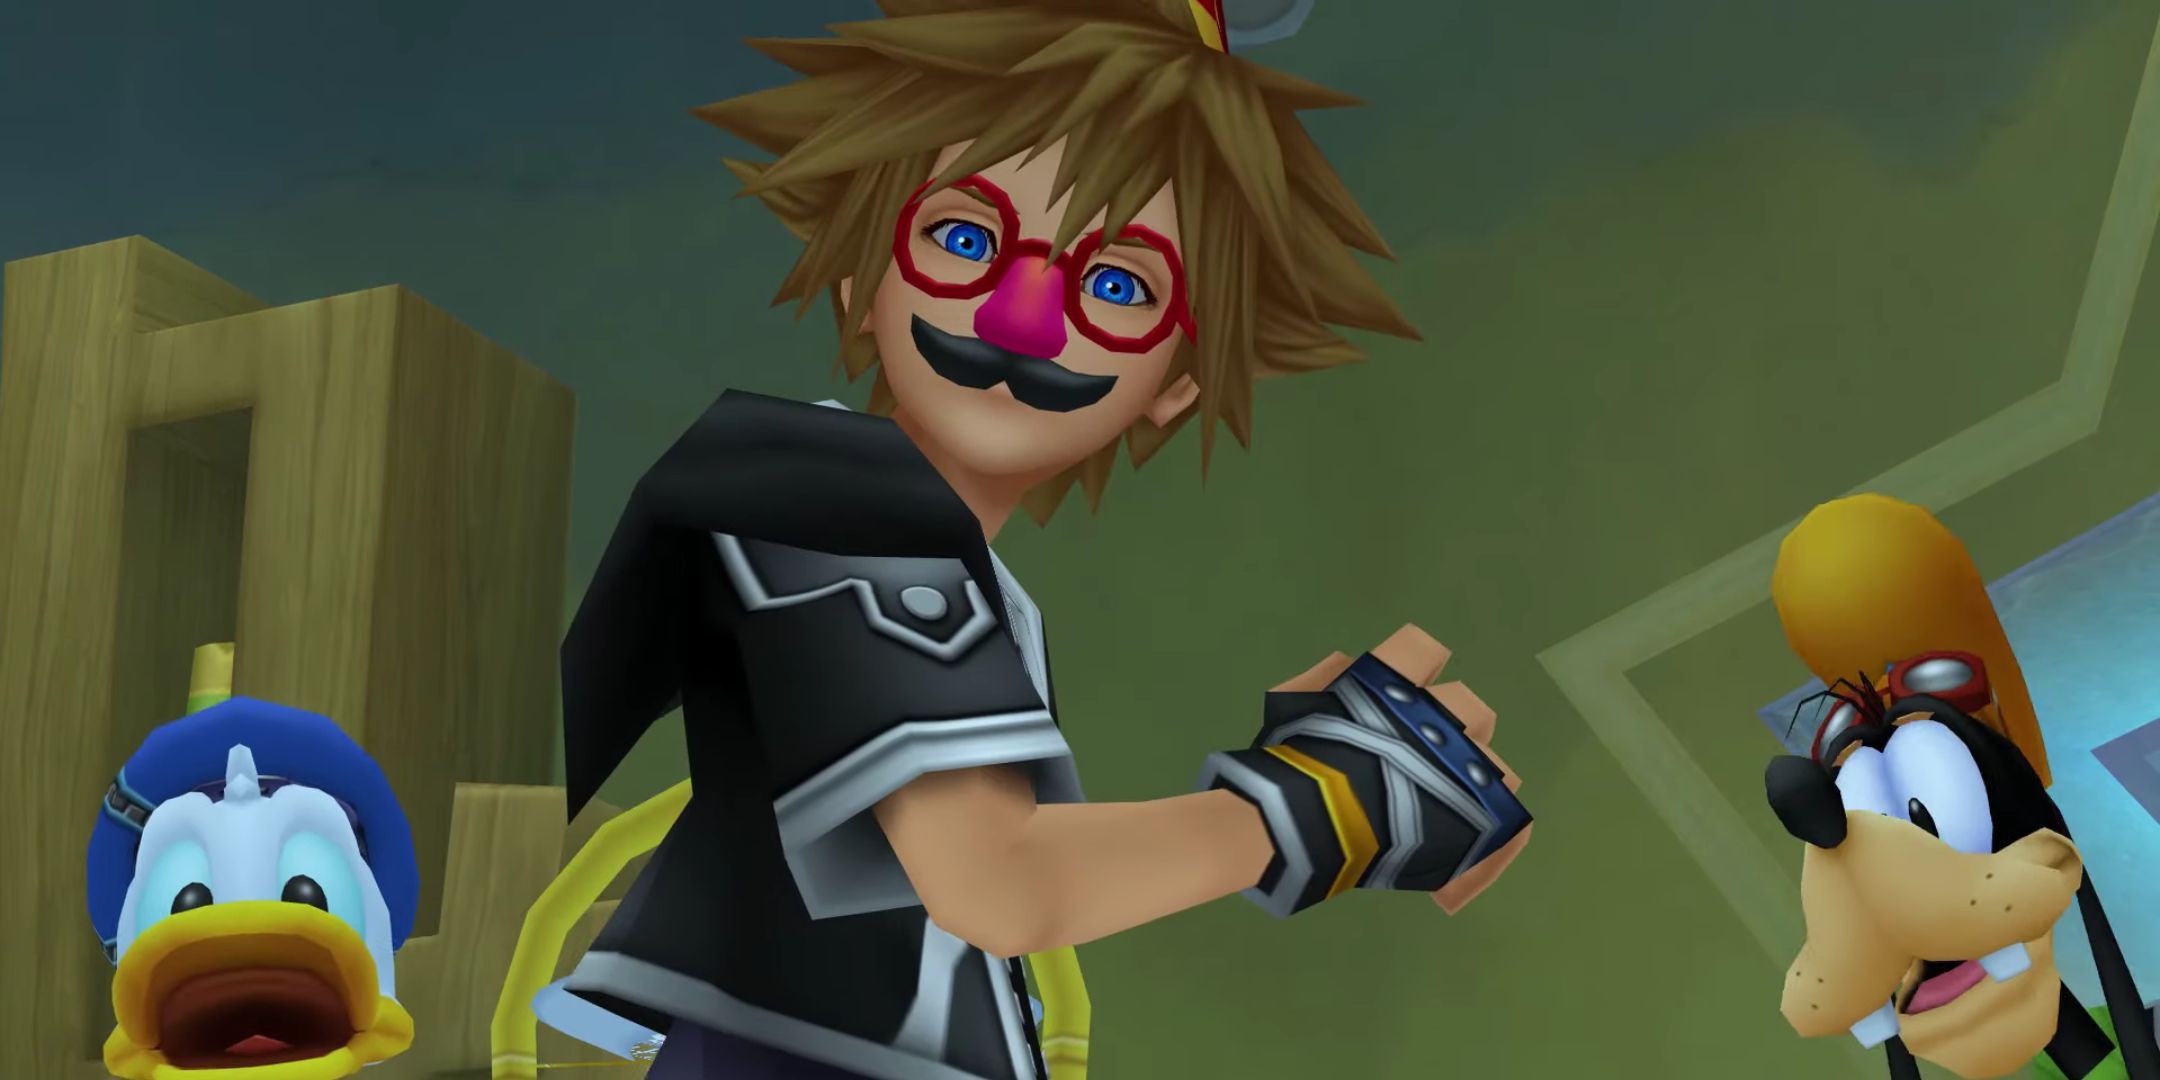 Sora wearing funny glasses in Kingdom Hearts: Dream Drop Distance.